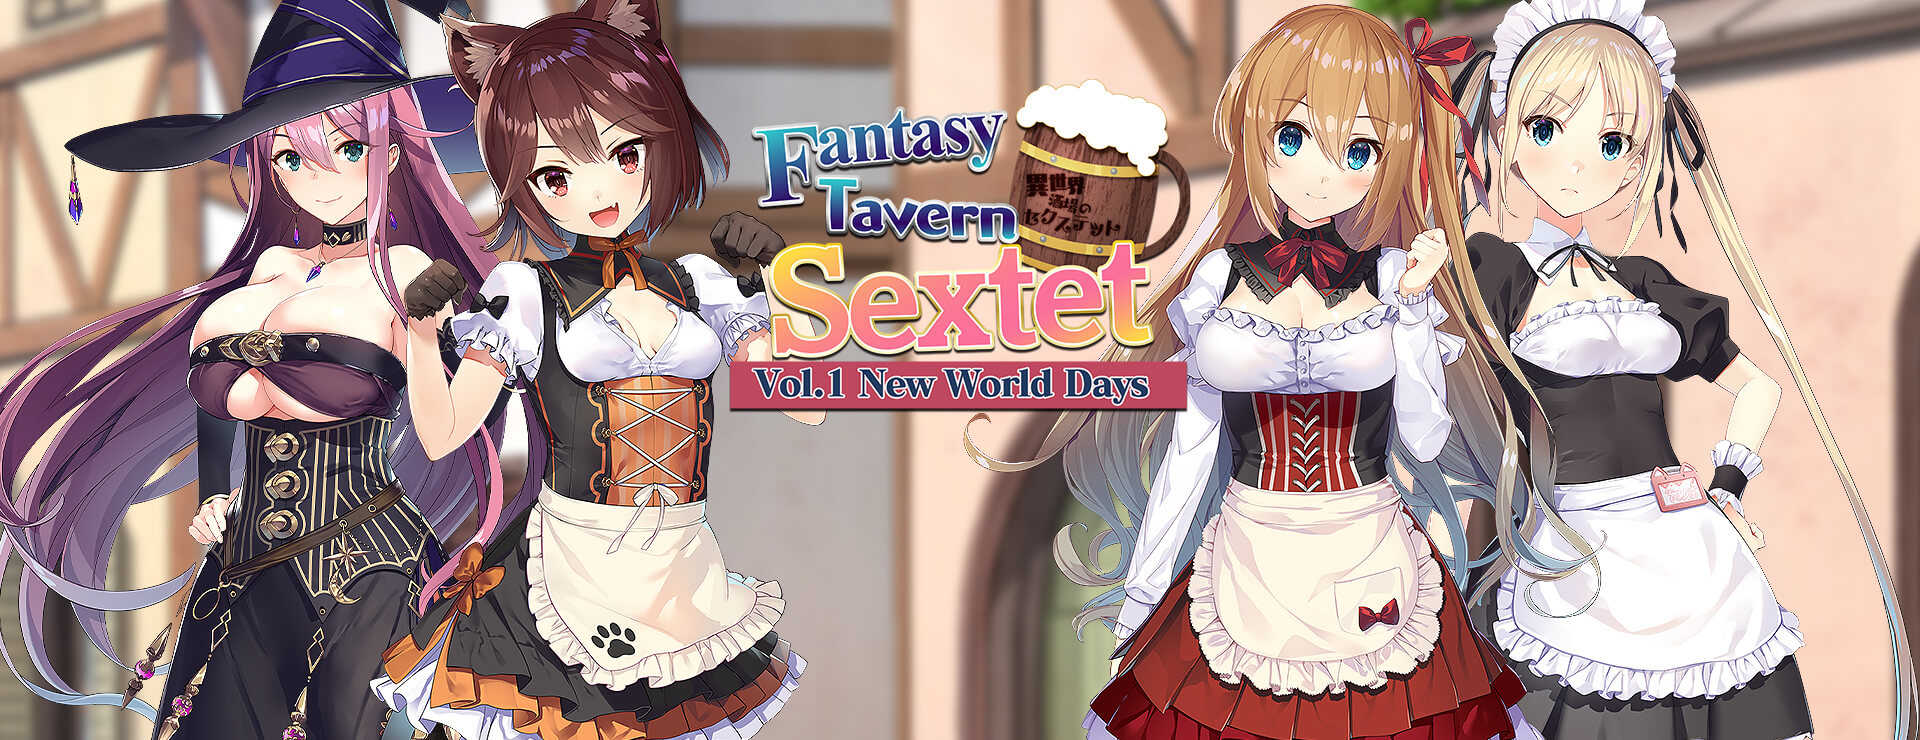 Fantasy Tavern Sextet - Vol.1 New World Days - ビジュアルノベル ゲーム